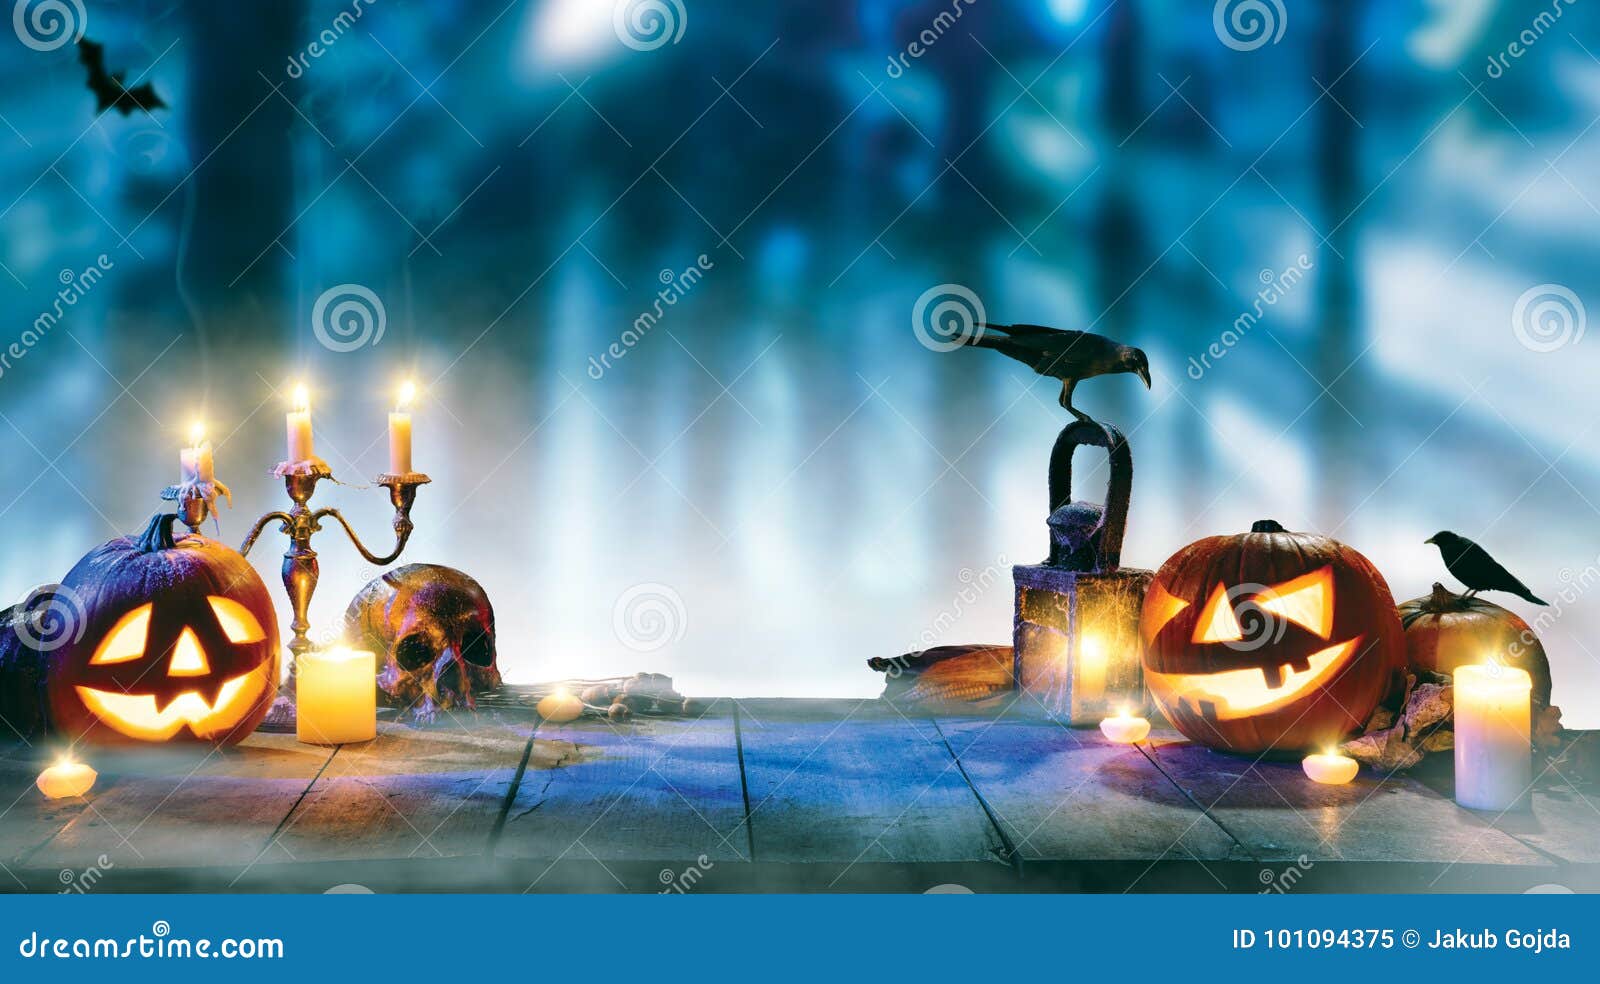 Spooky Halloween Pumpkins On Wooden Planks Stock Image - Image of ...